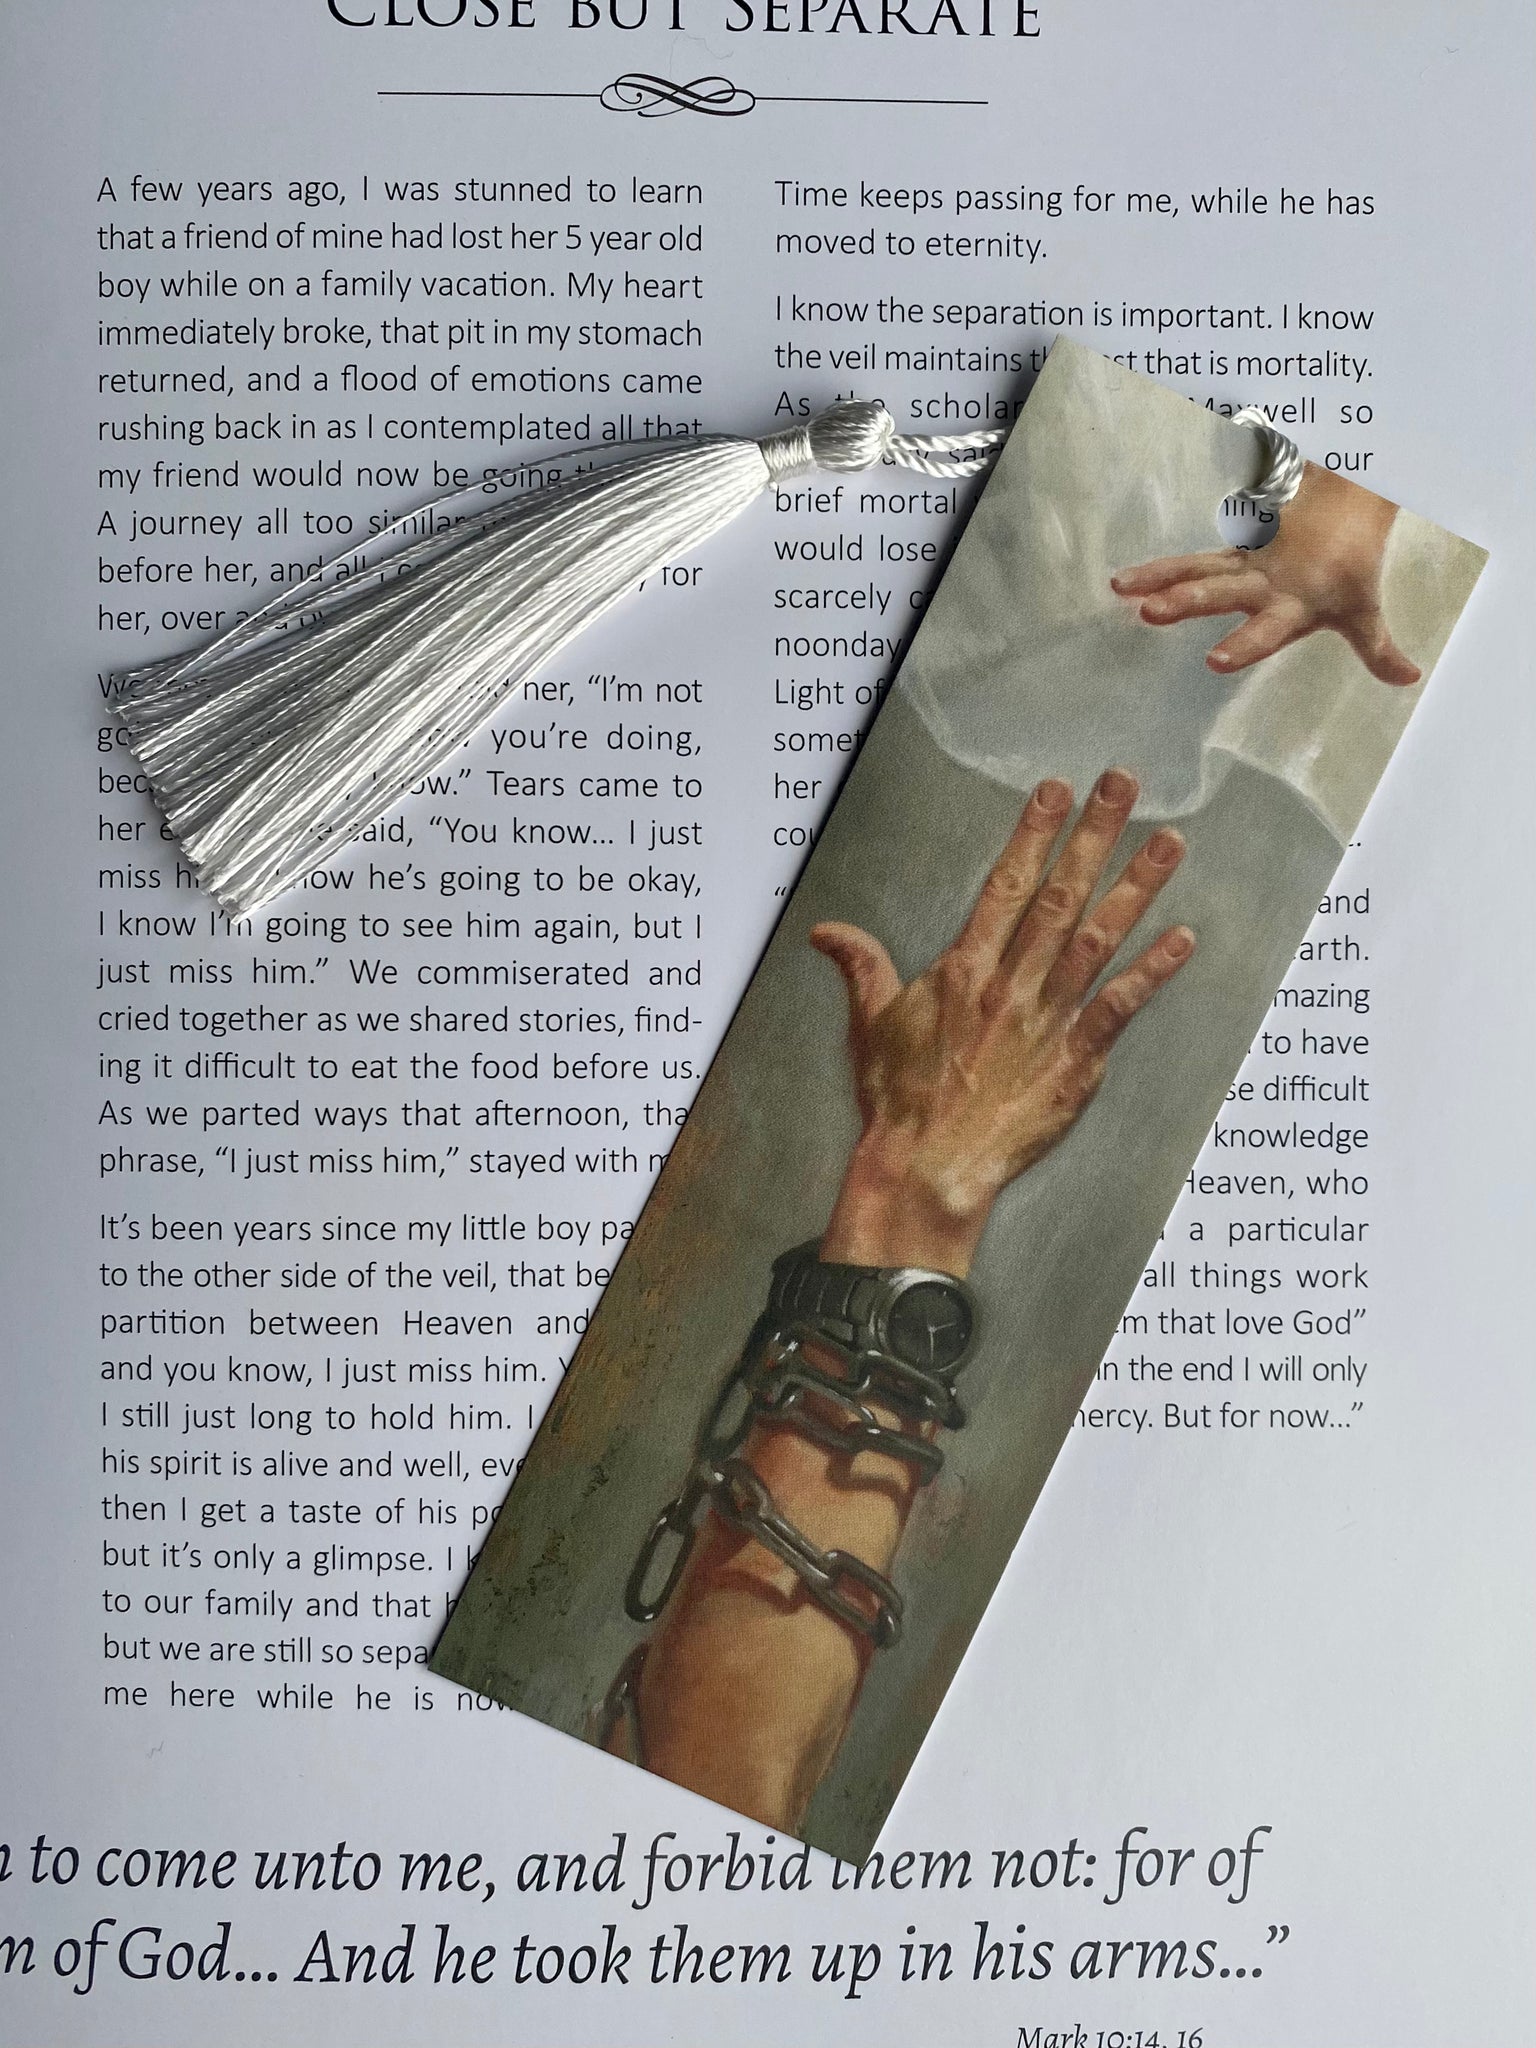 Close but Separate bookmark – JenedyPaige